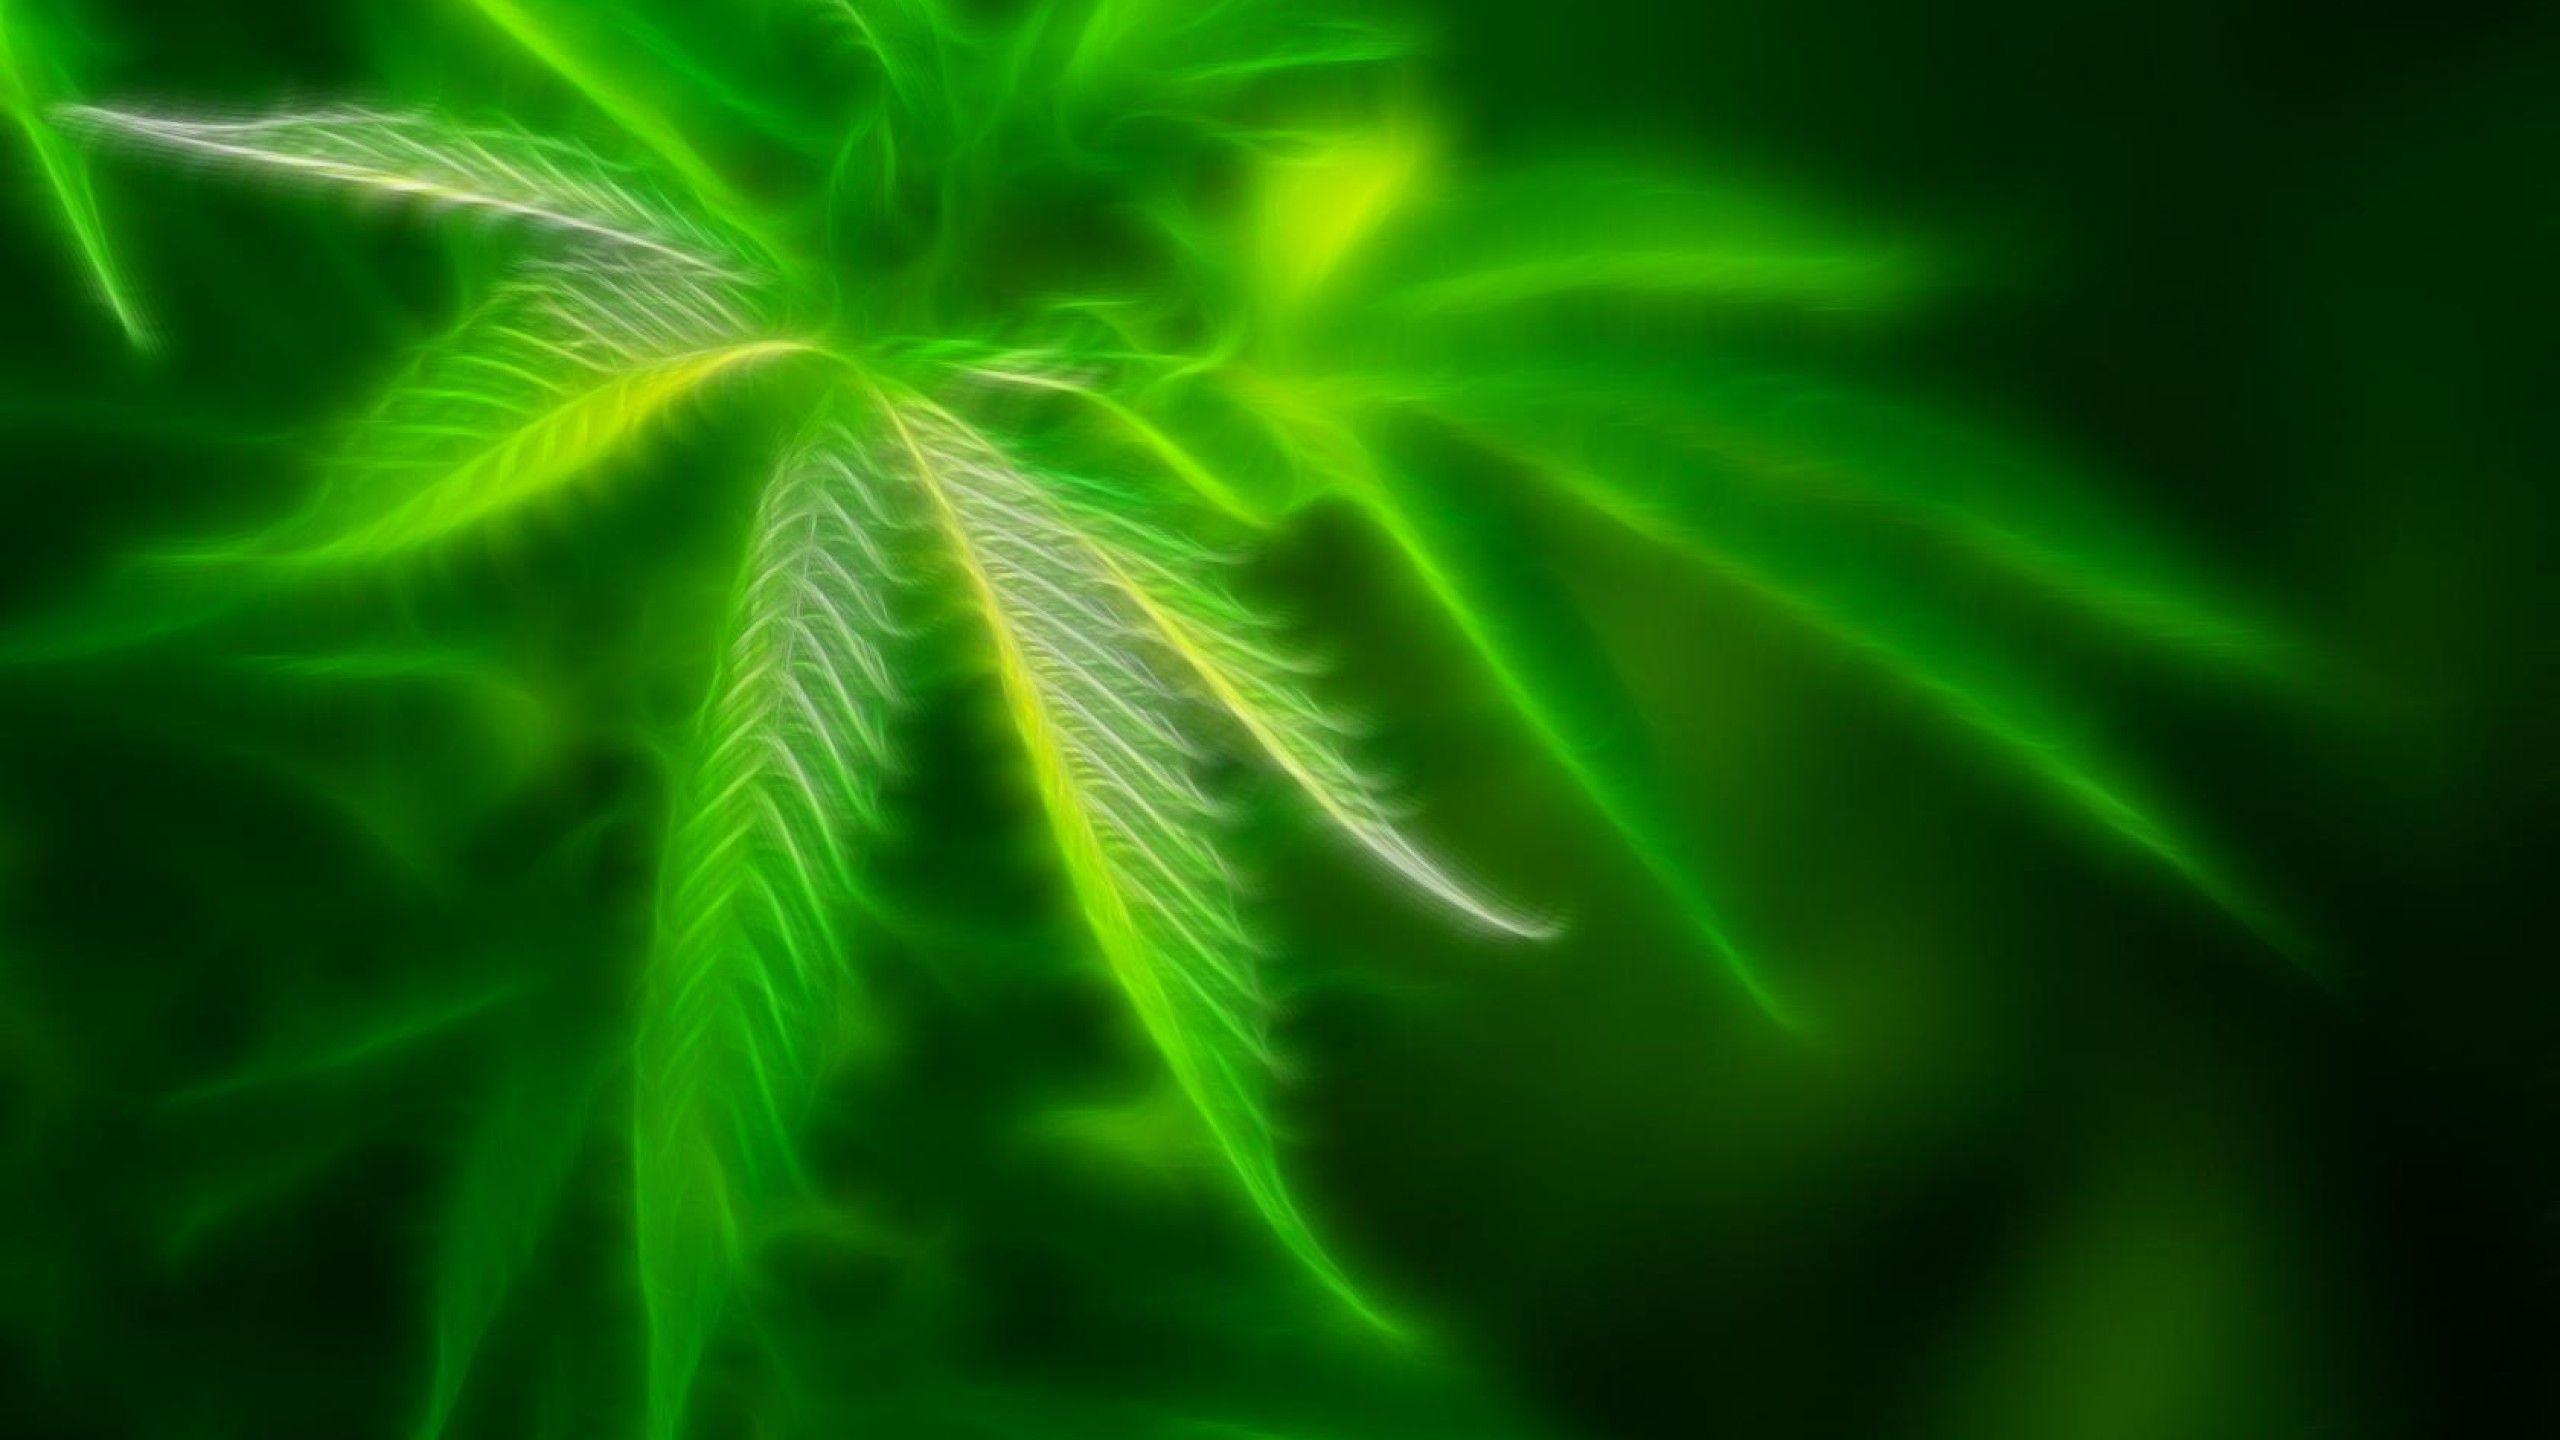 Weed drugs marijuana 420 nature psychedelic plant cannabis rasta